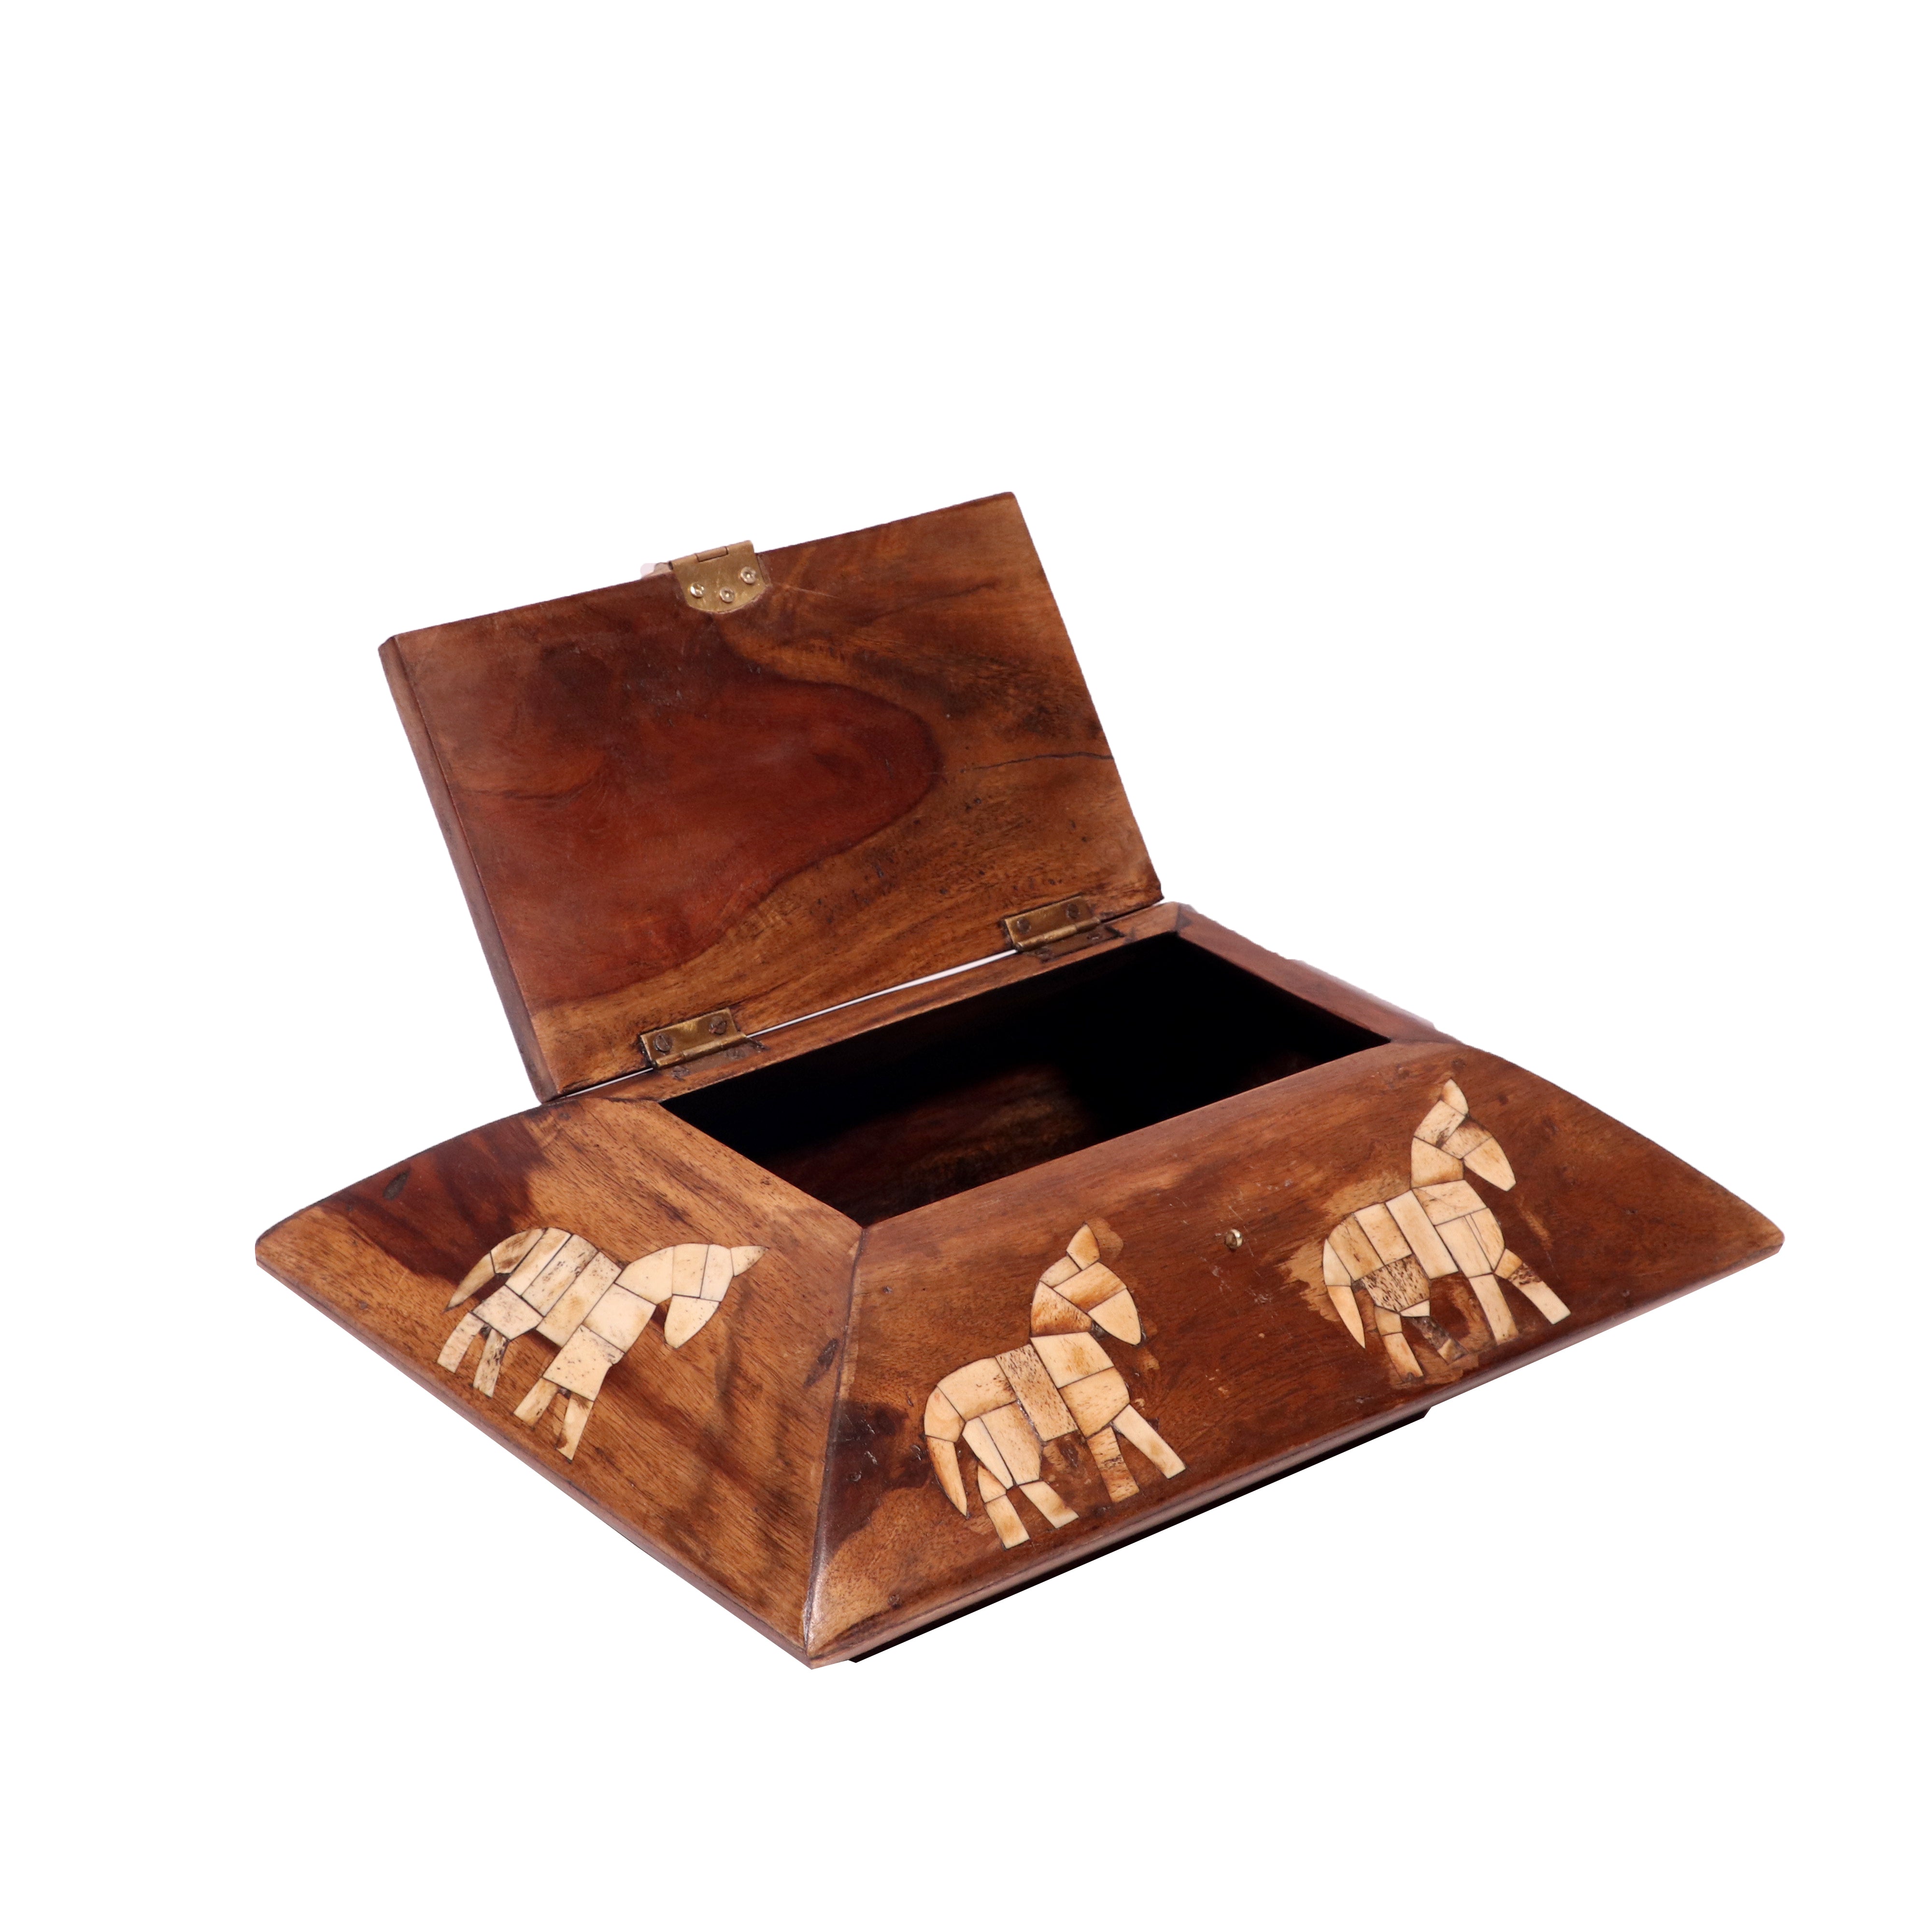 Vintage Inlay Horse Designed Wooden Handmade Diamond Shaped Box Wooden Box